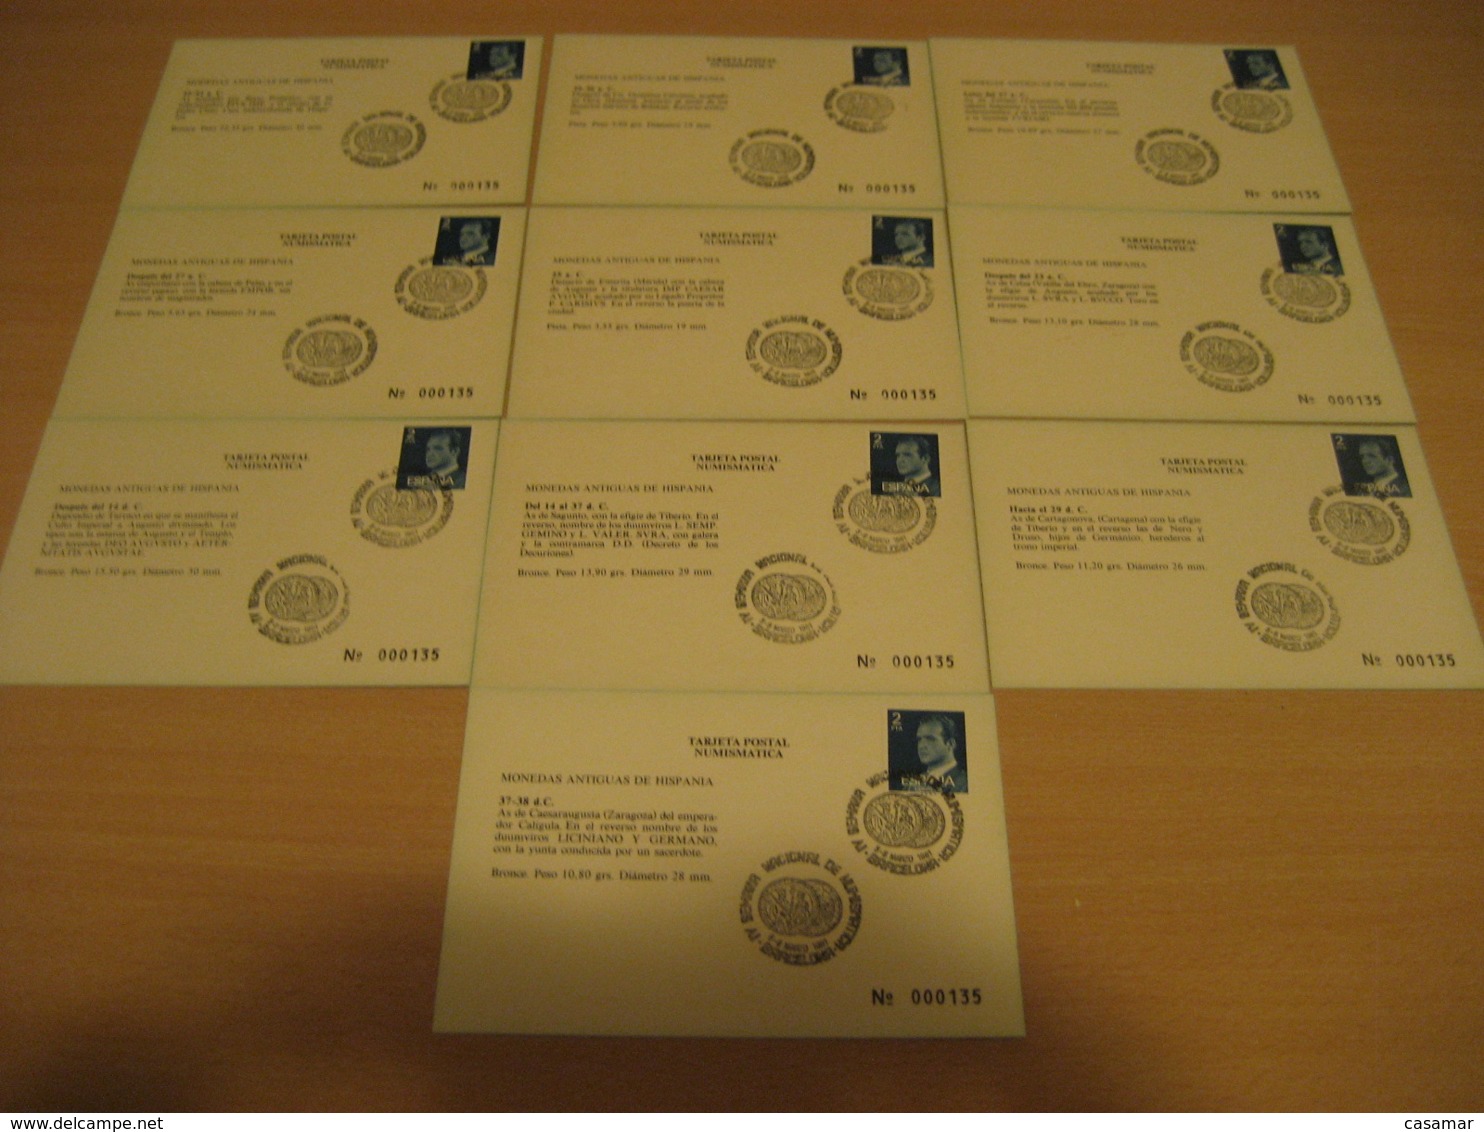 BARCELONA 1981 Semana Numismatica Cancel 10 Set Post Card Monedas Moneda SPAIN Coin Coins Numismatics Numismatique - Münzen